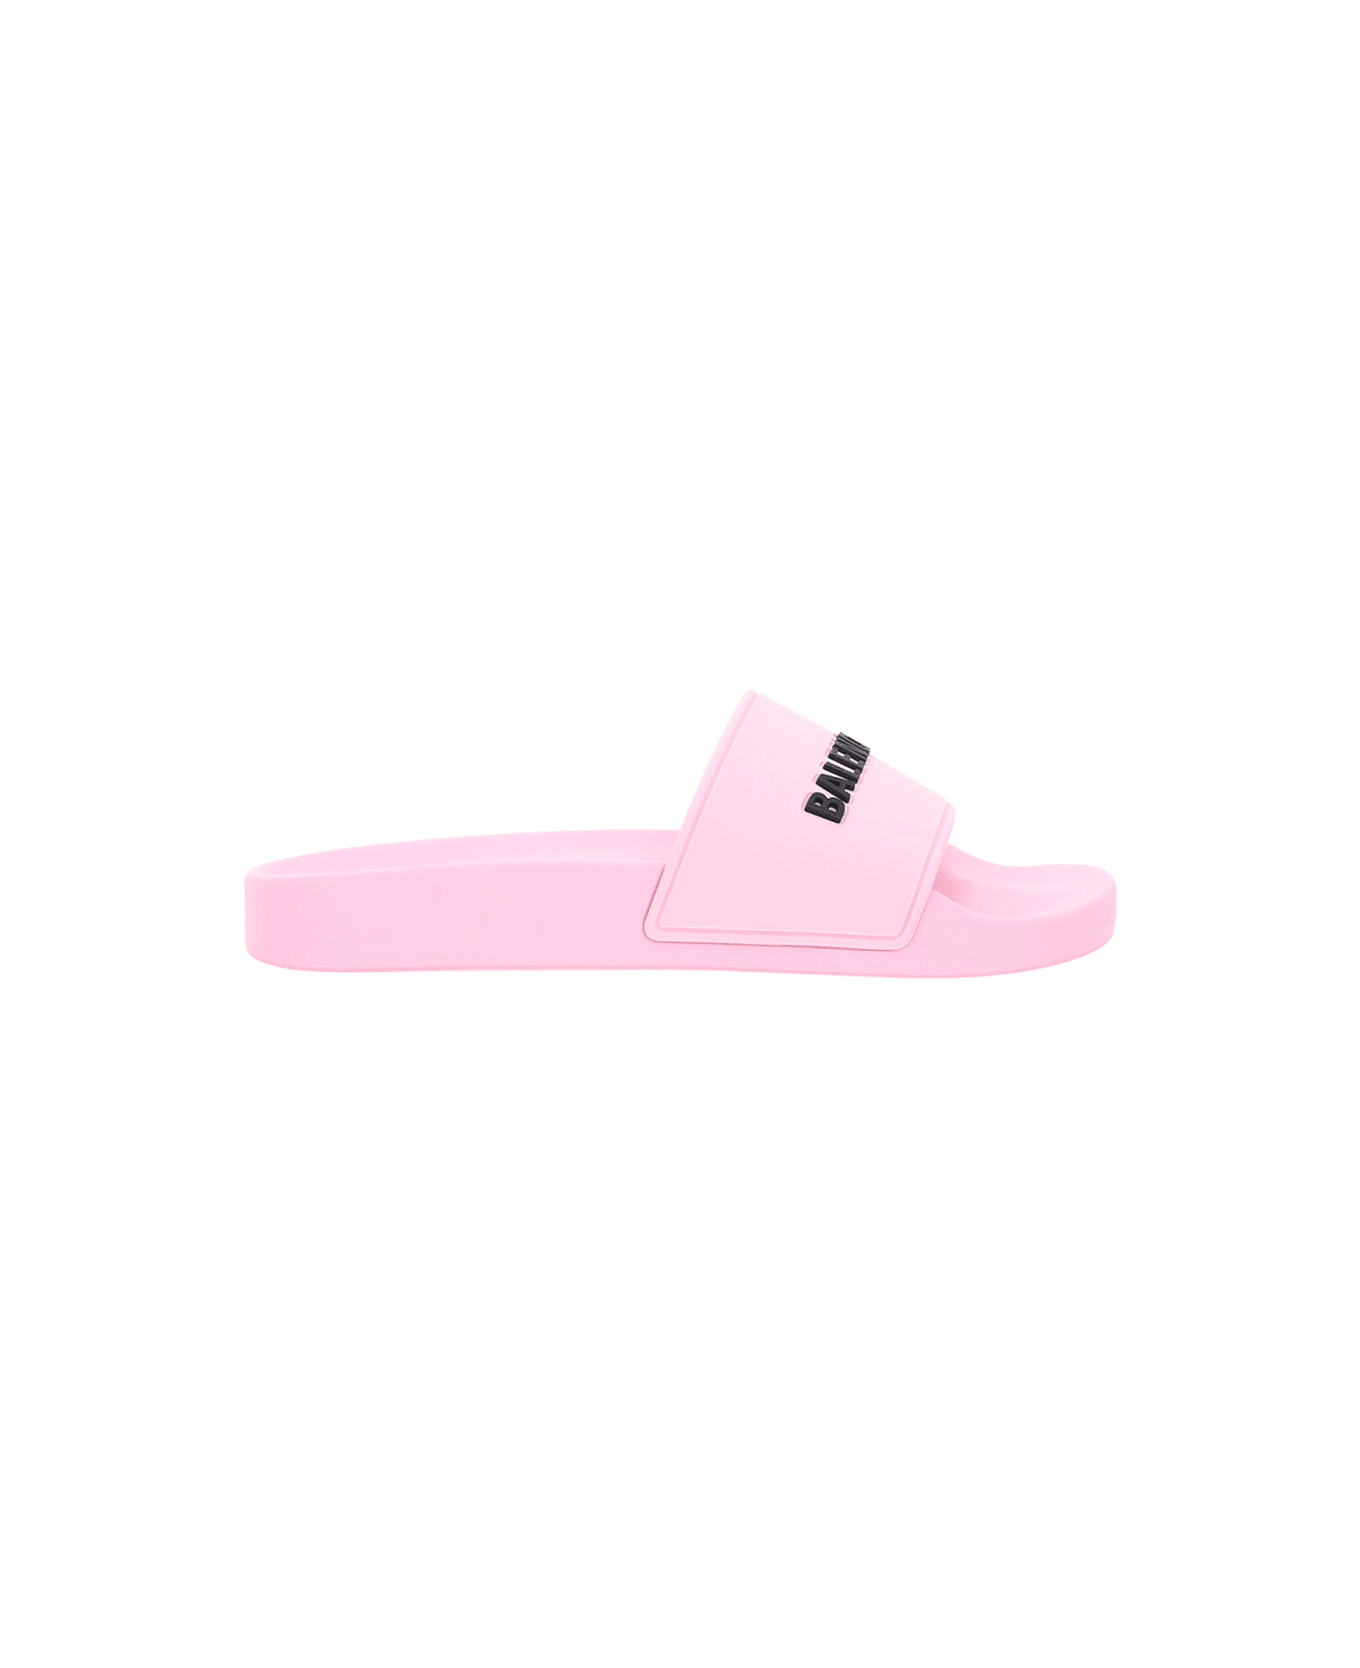 Balenciaga Slides - Light Pink/black